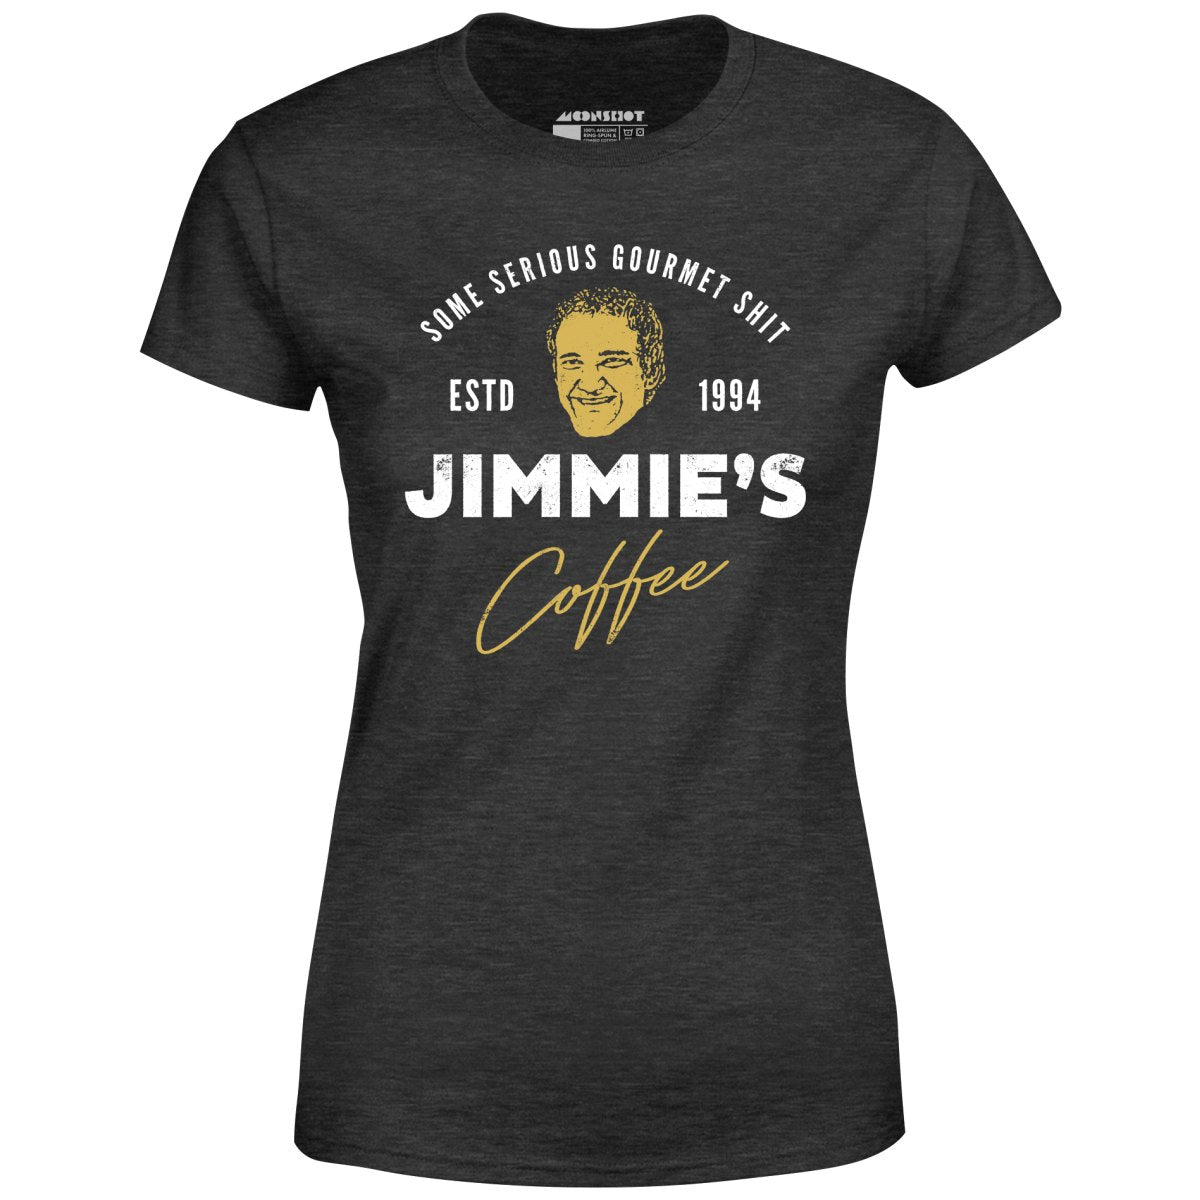 Jimmie's Coffee - Women's T-Shirt